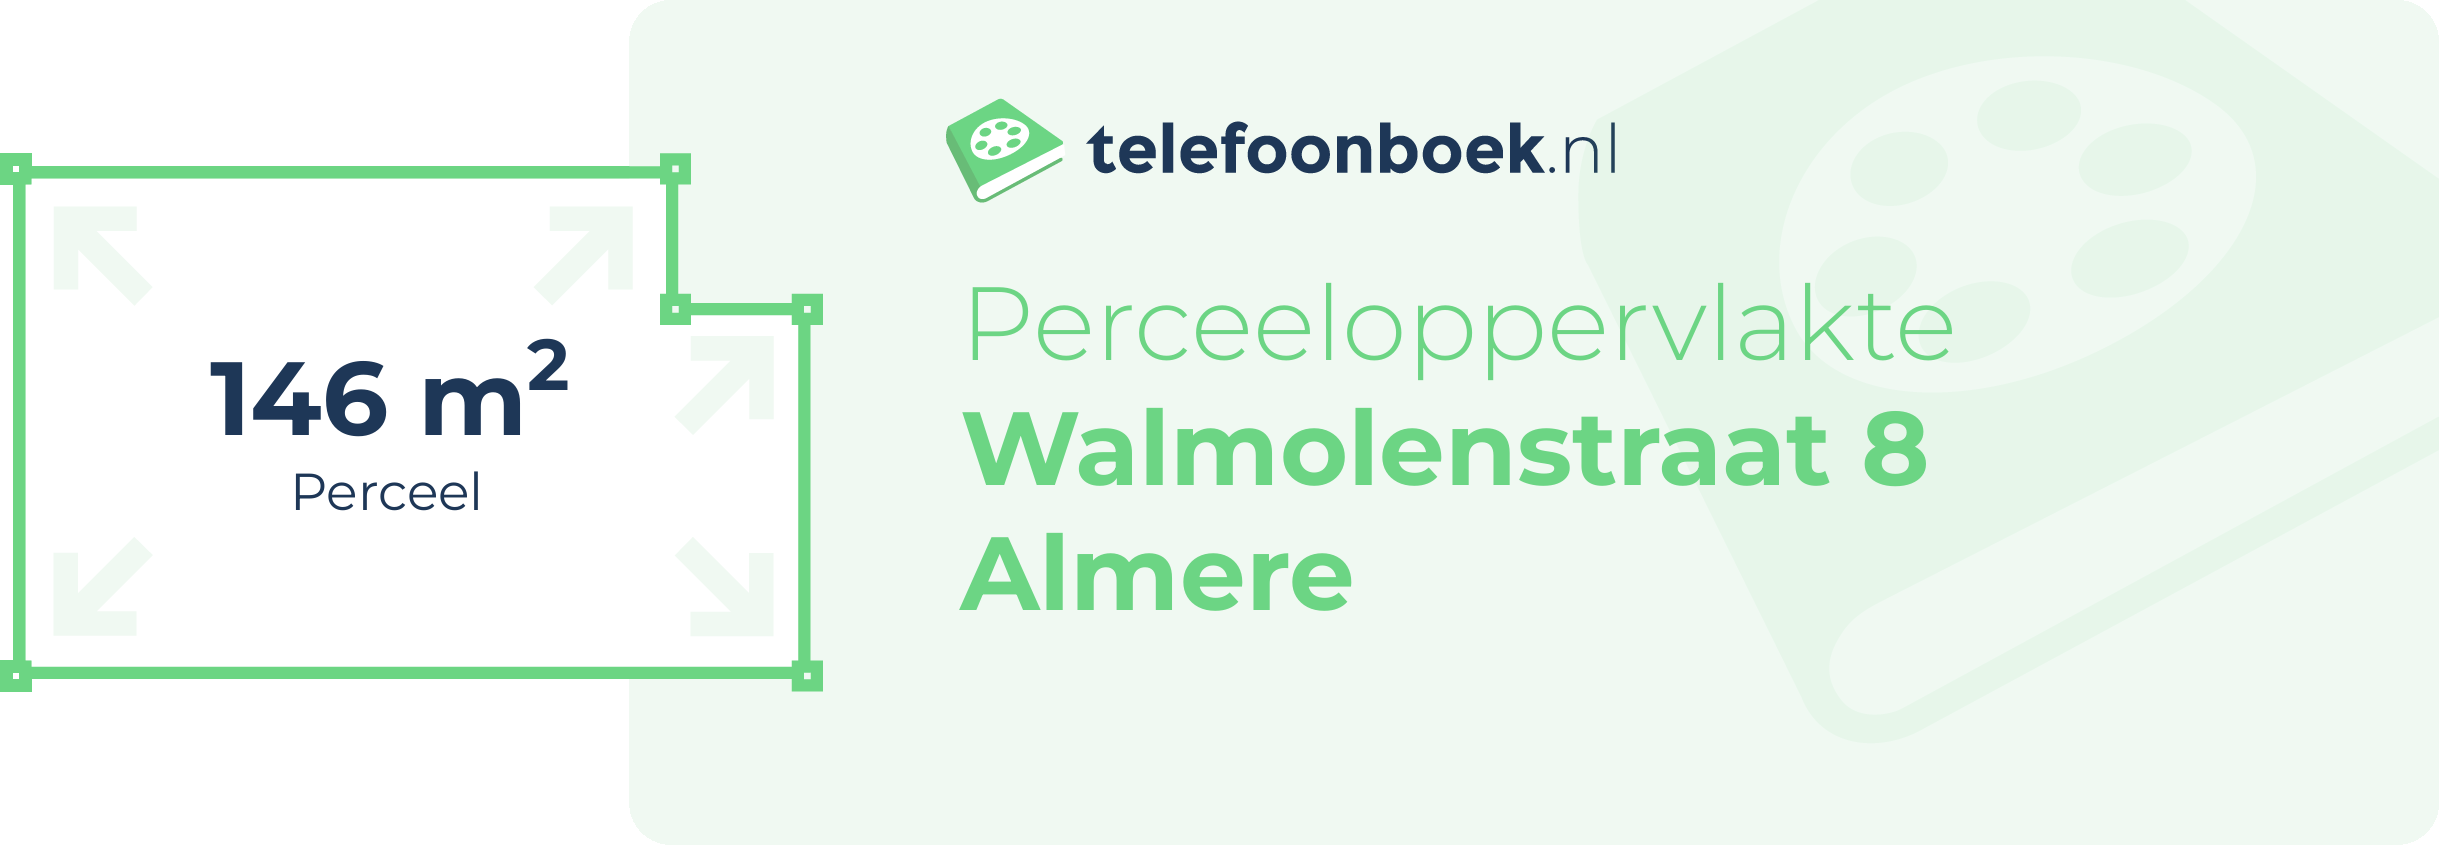 Perceeloppervlakte Walmolenstraat 8 Almere